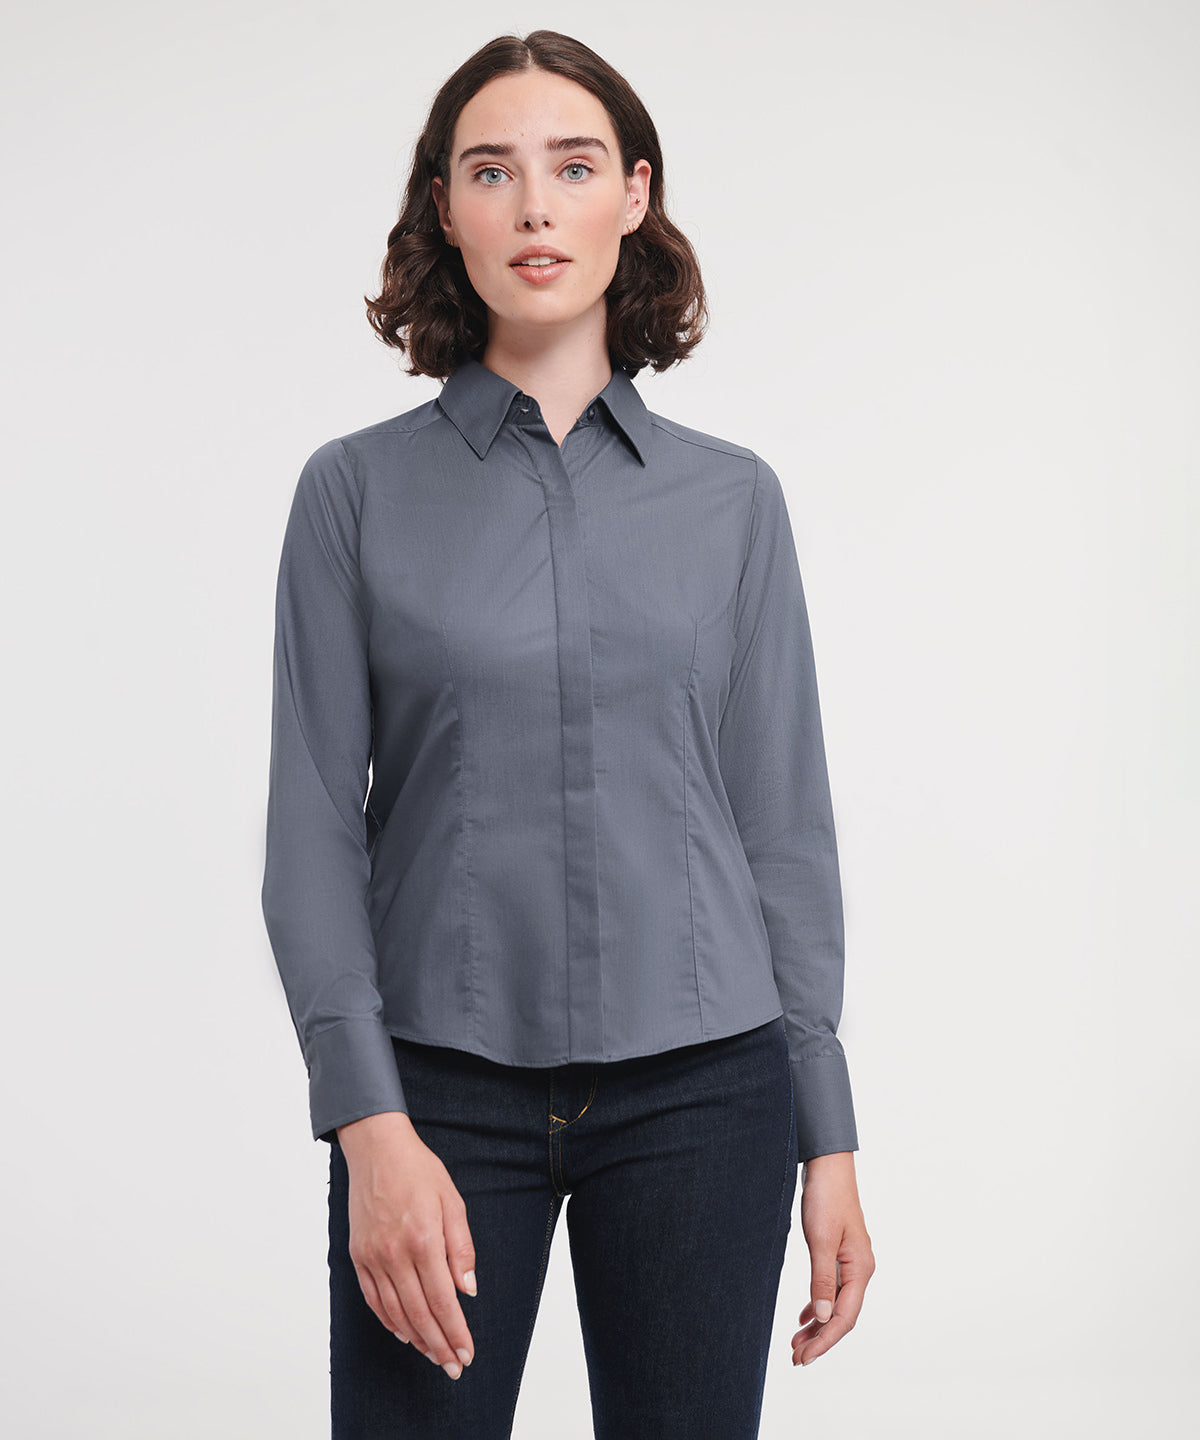 Women's Long Sleeve Polycotton Easycare Fitted Poplin Shirt